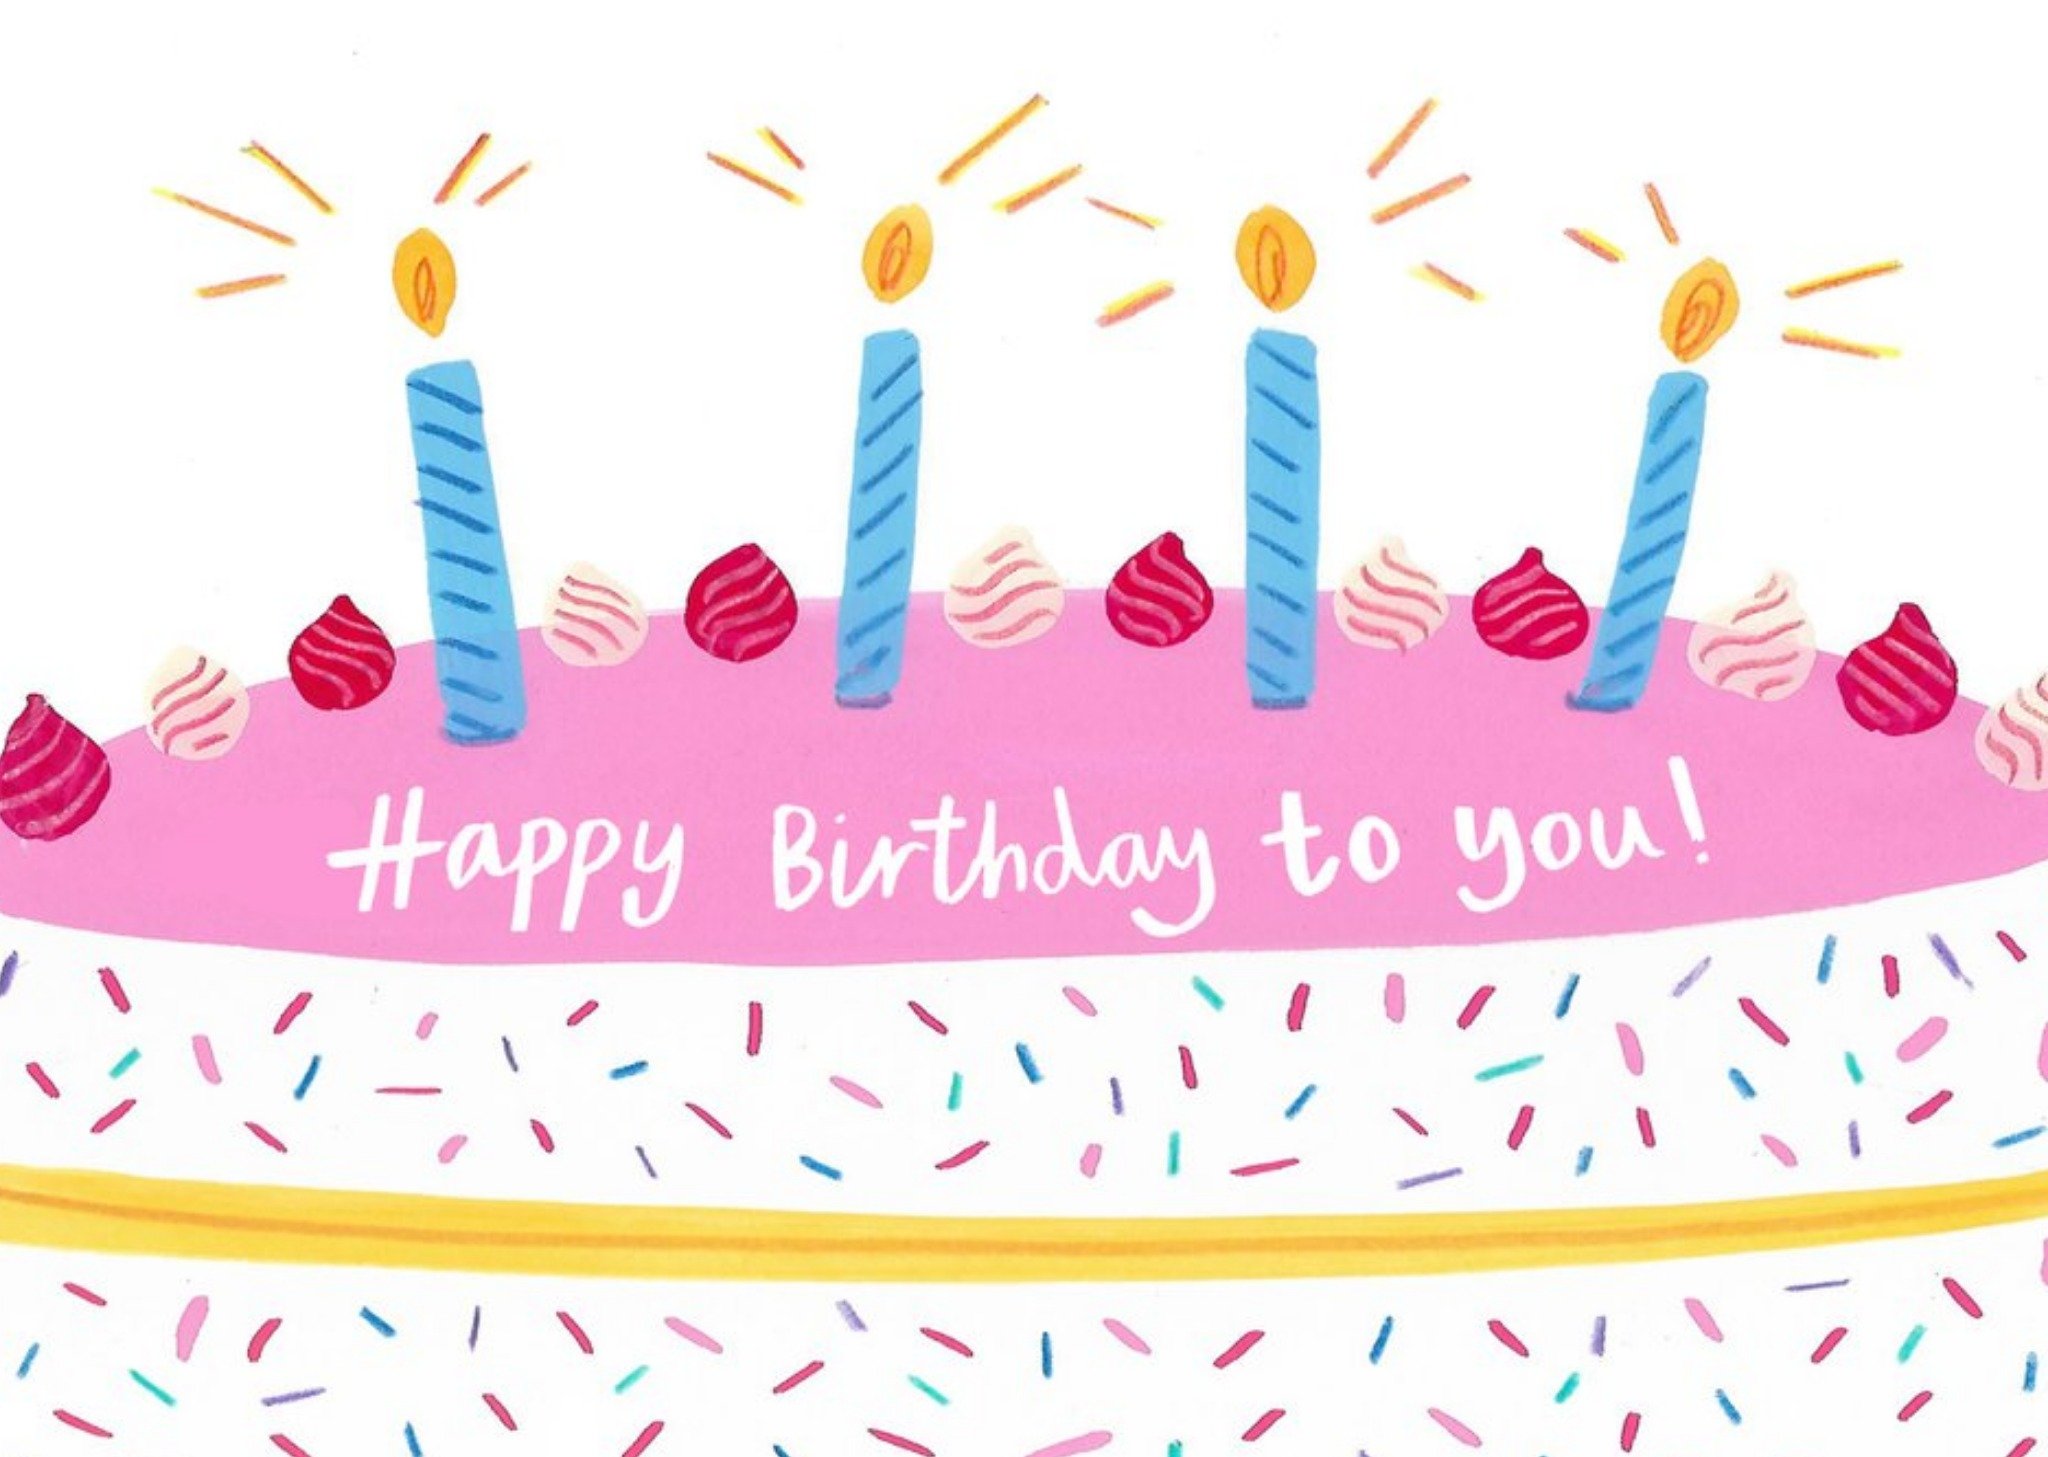 Moonpig Happy Birthday To You Birthday Cake Candles Birthday Card, Large